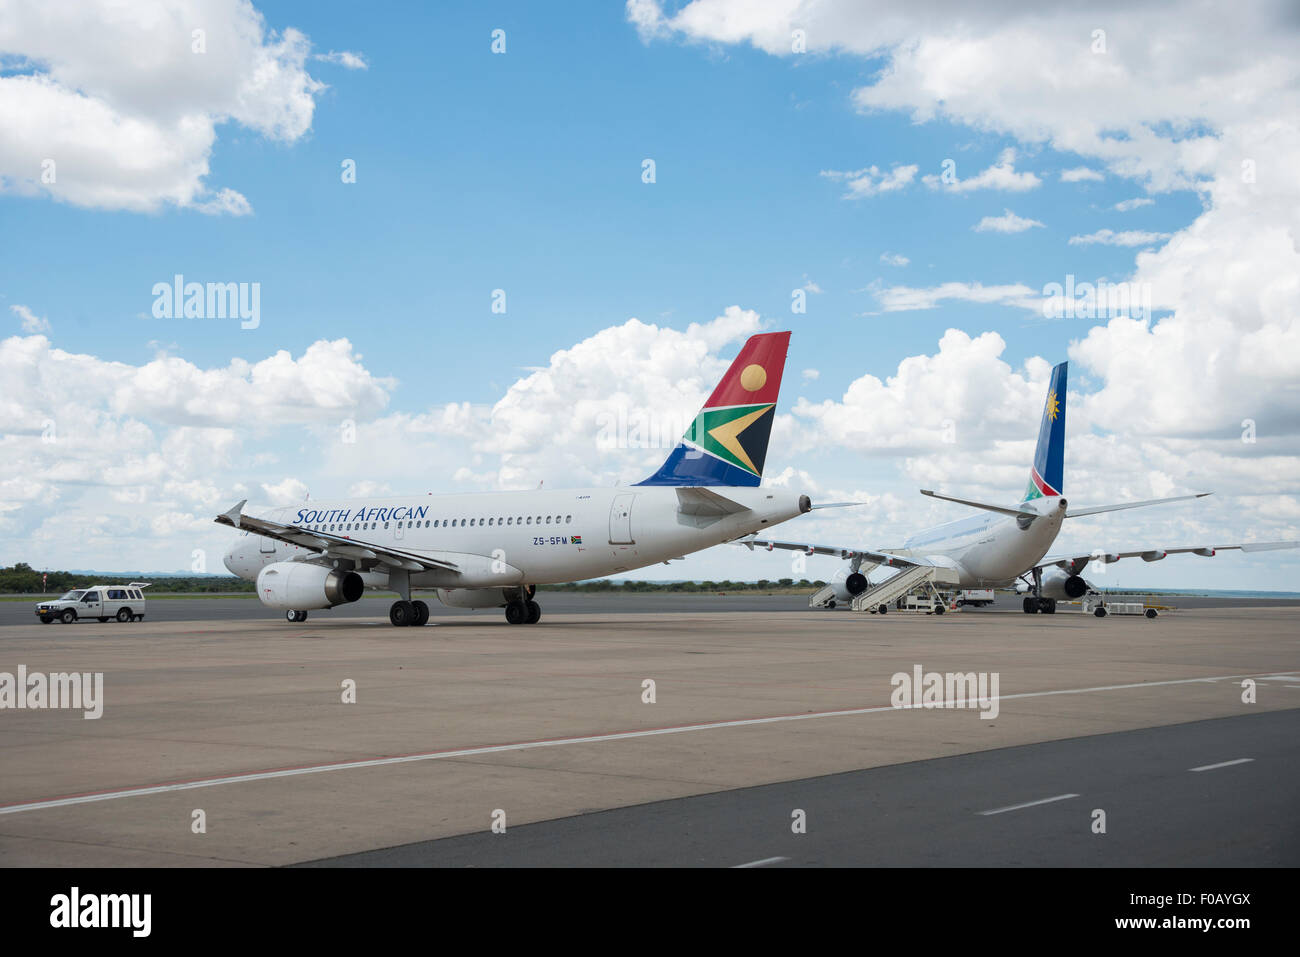 South African Airways Airbus A319 und Air Namibia Flugzeug am internationalen Flughafen Hosea Kutako, Windhoek, Republik Namibia Stockfoto